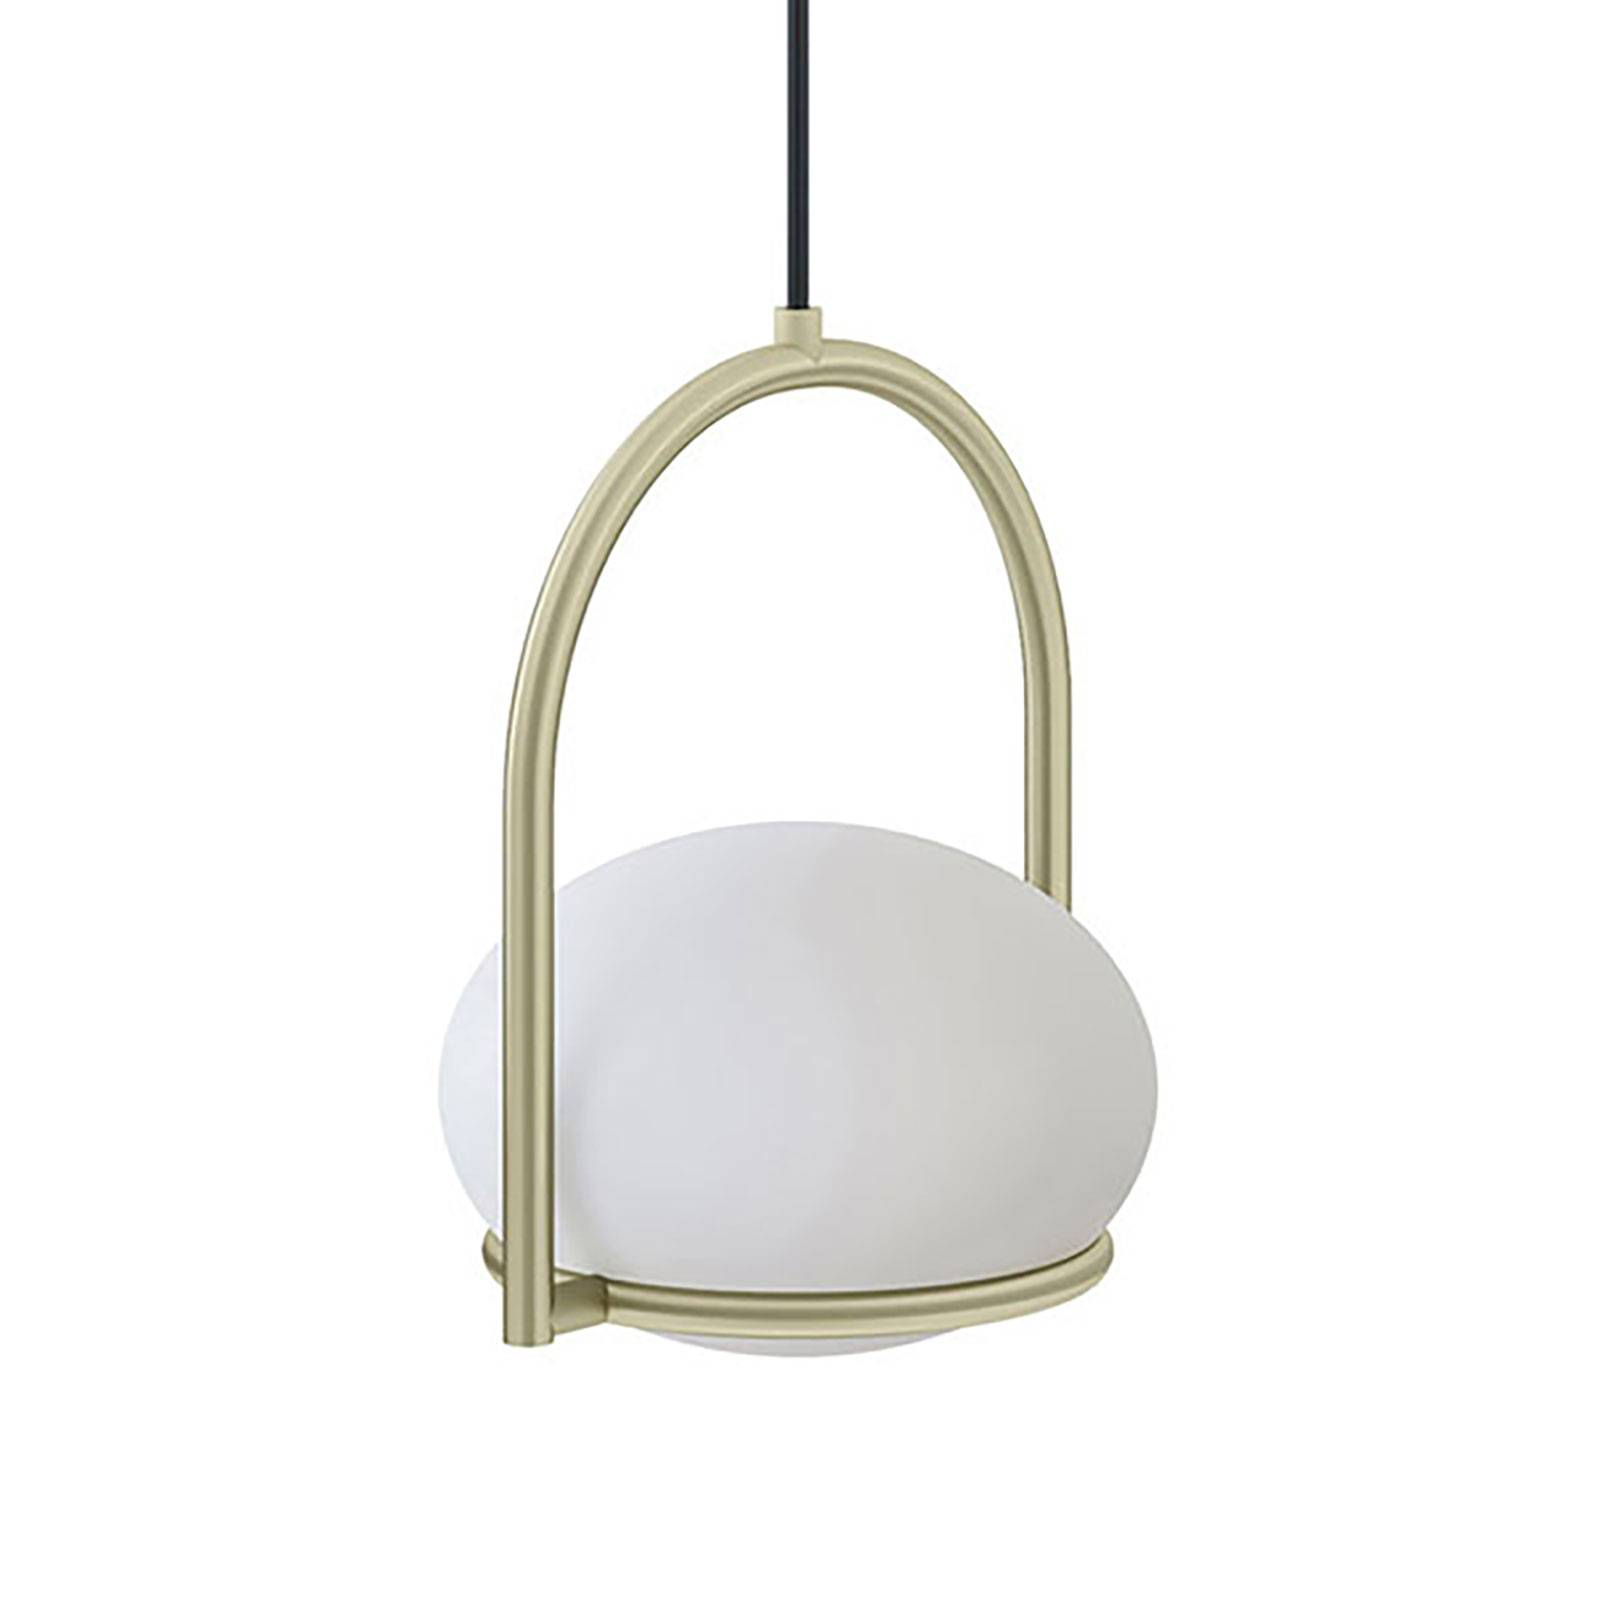 Photos - Chandelier / Lamp Leds C4 LEDS-C4 Coco Single hanging light, gold/white 